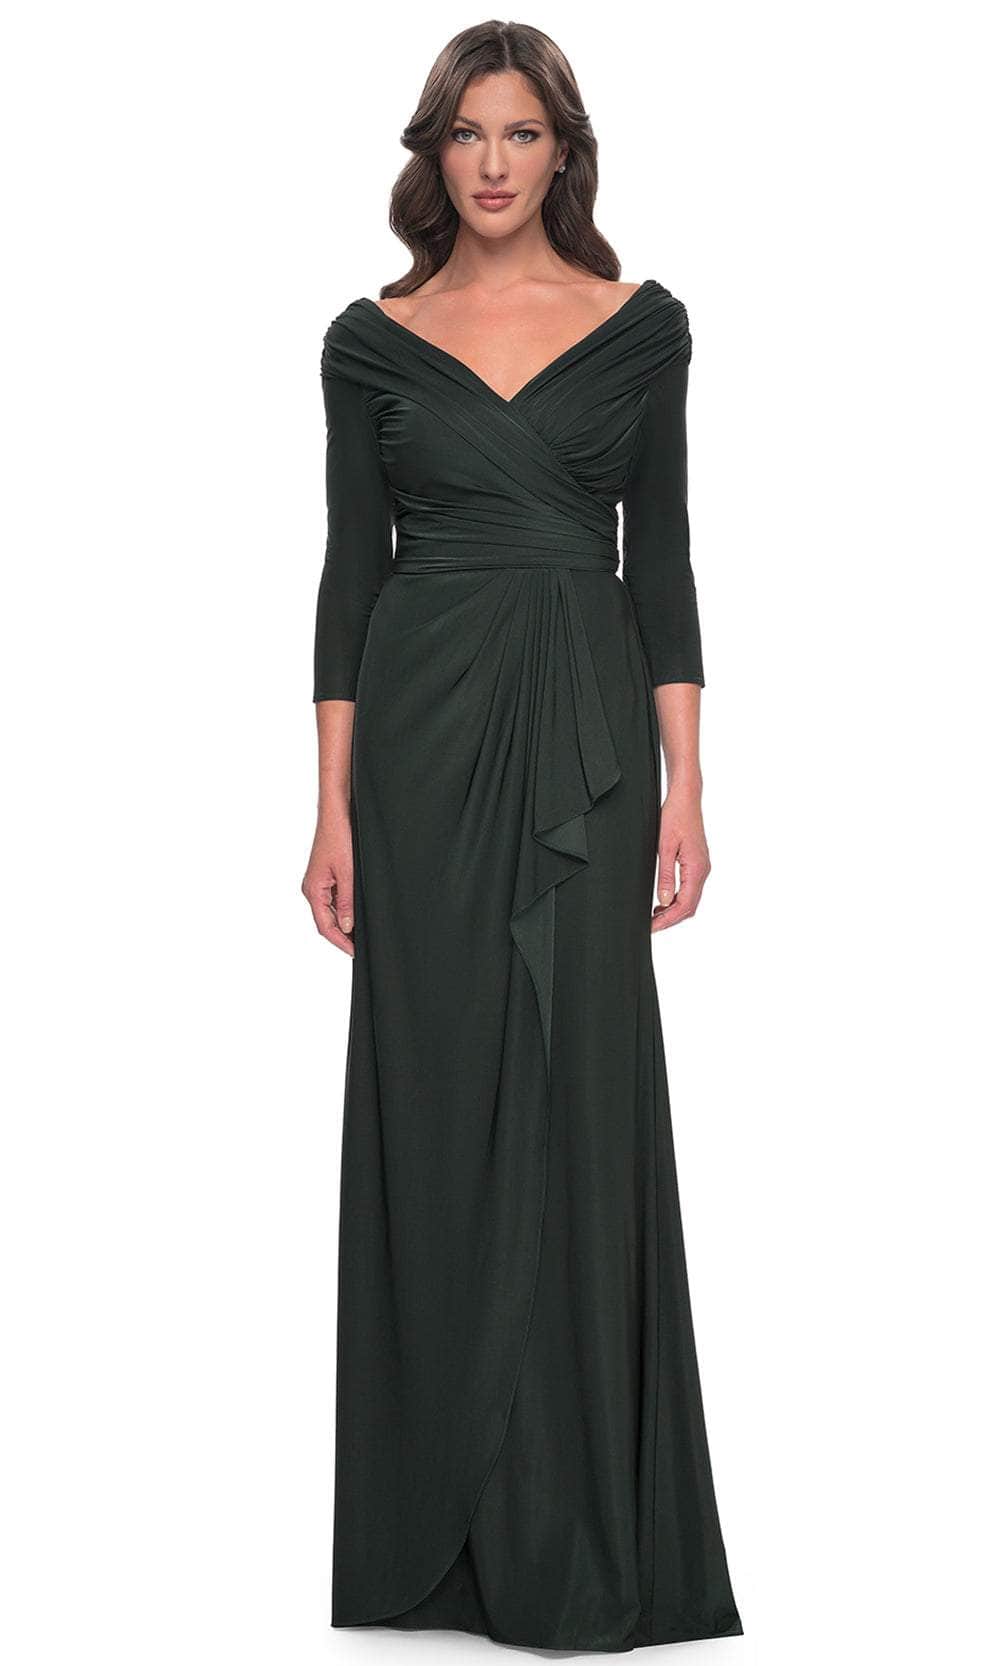 Image of La Femme 30845 - Ruched Long Sleeve Evening Dress